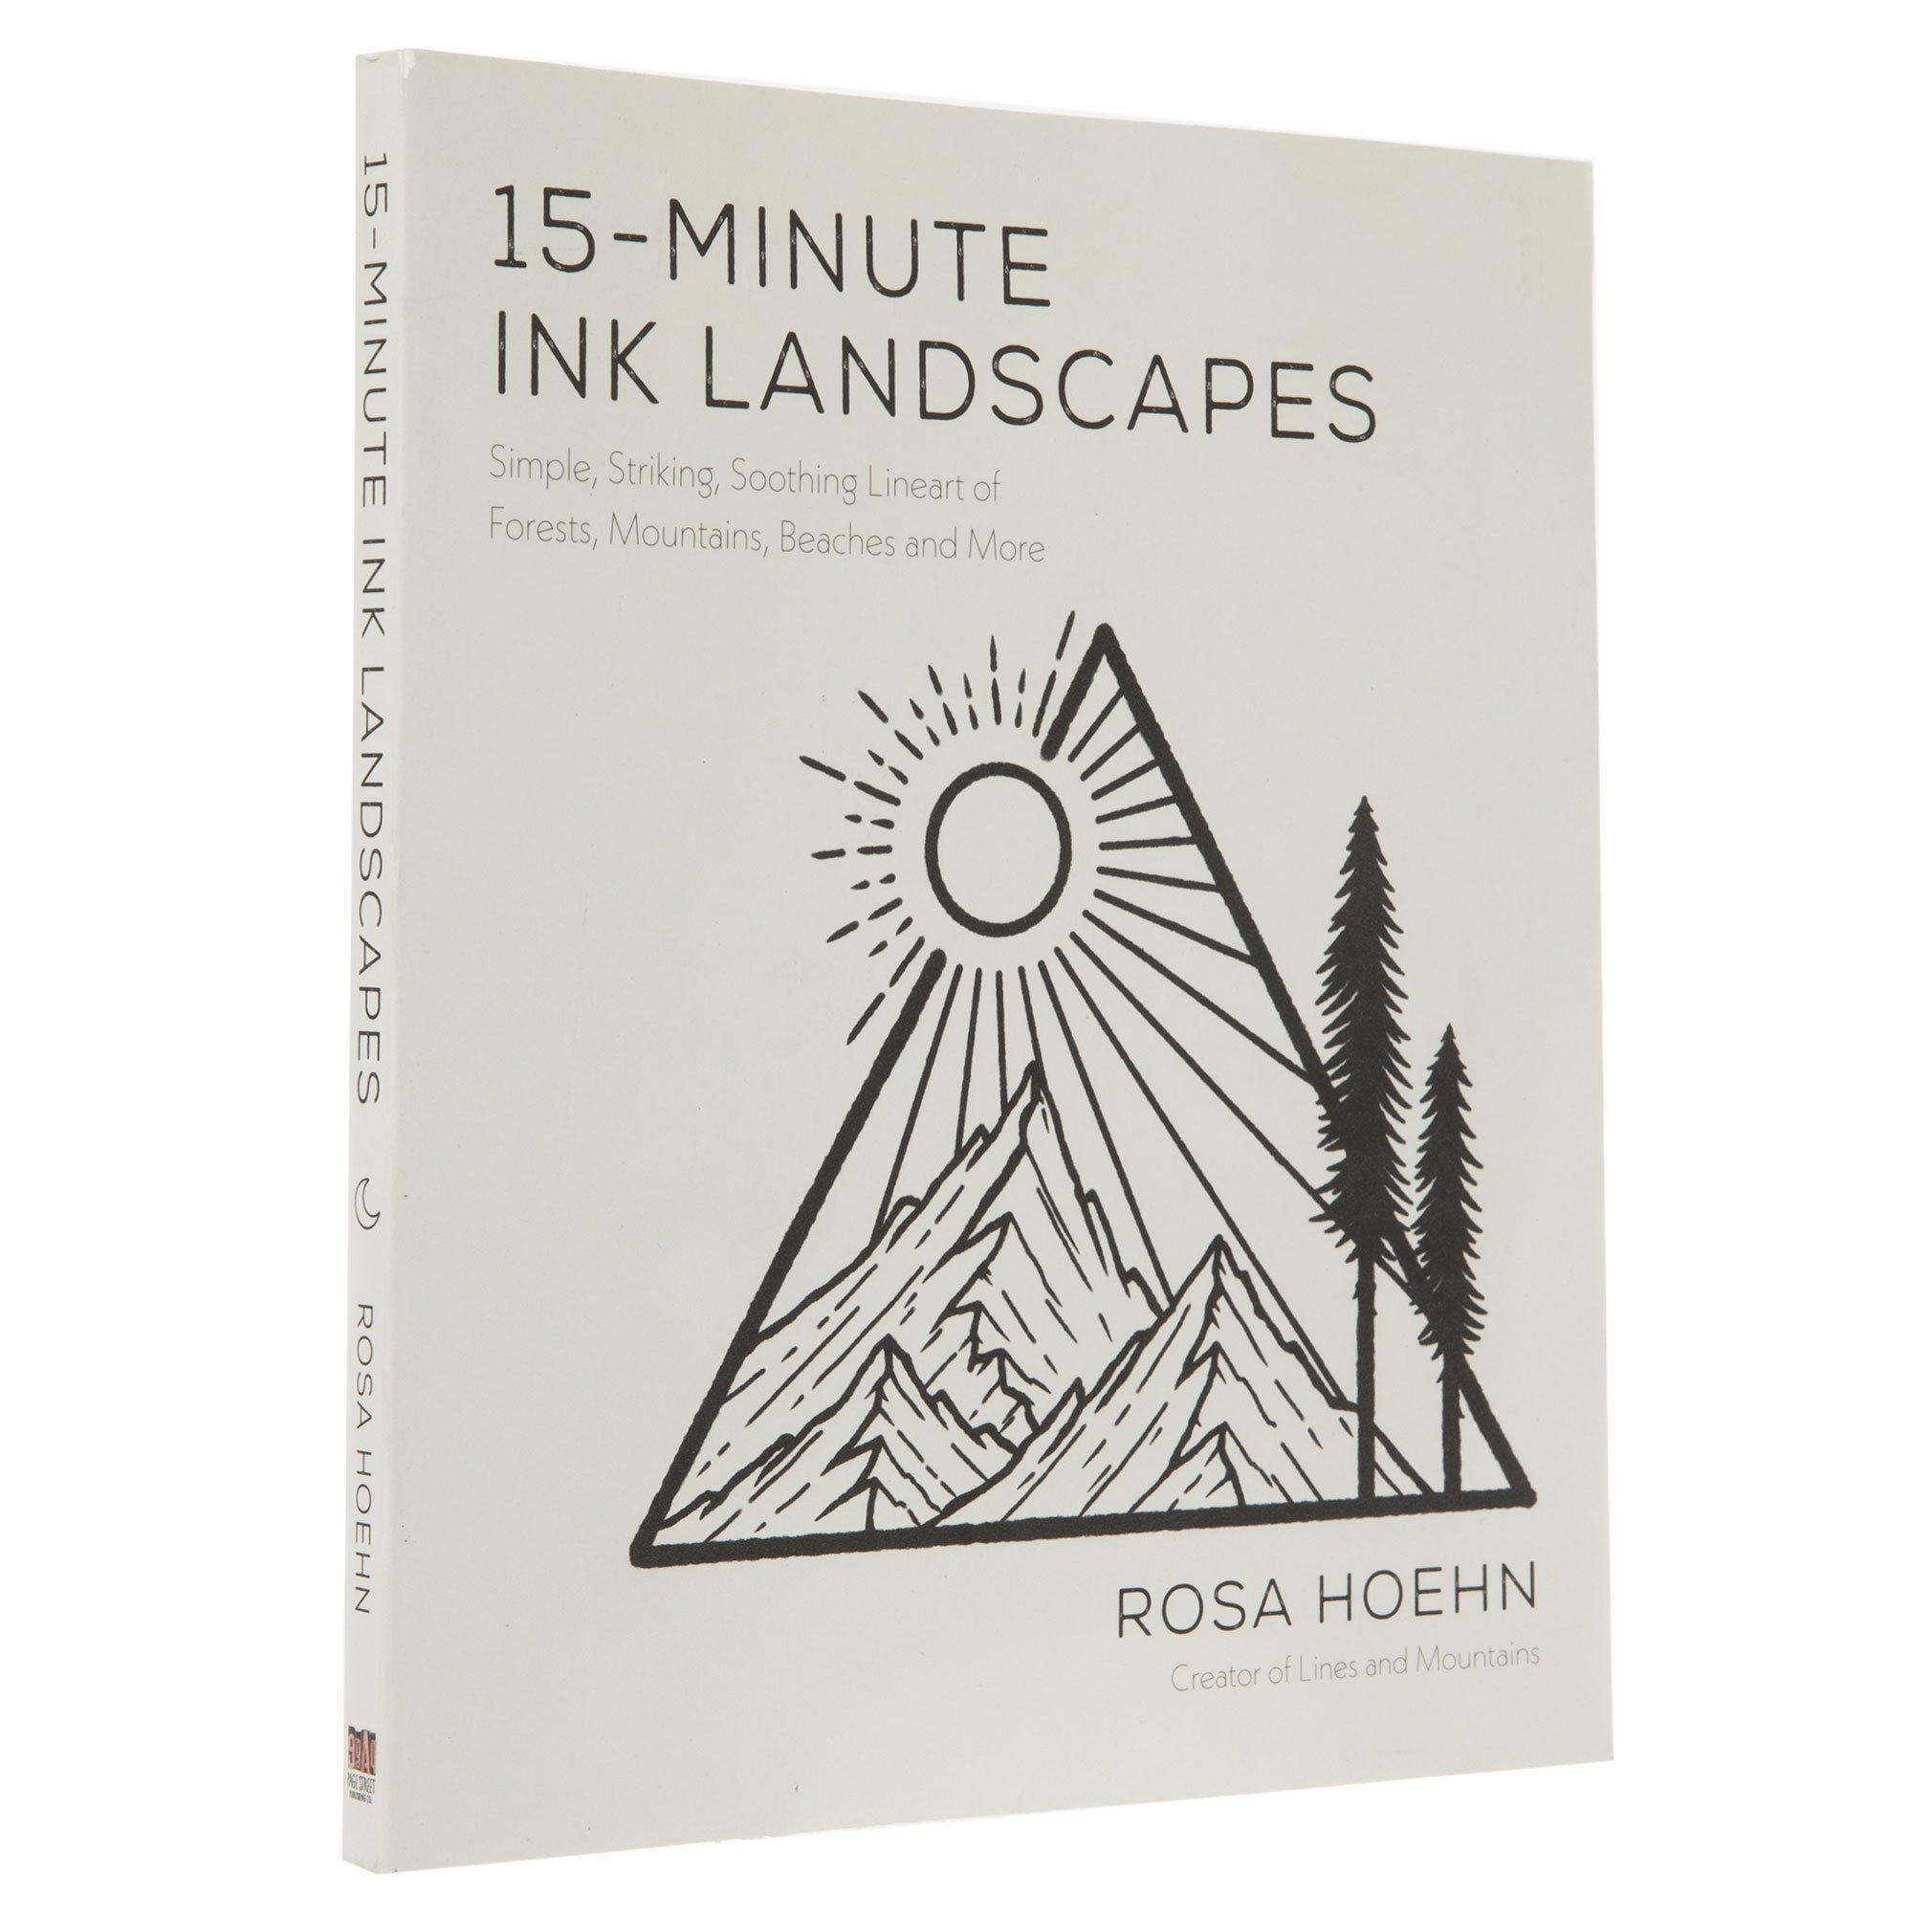 Mountain & Landscape Kit, Hobby Lobby